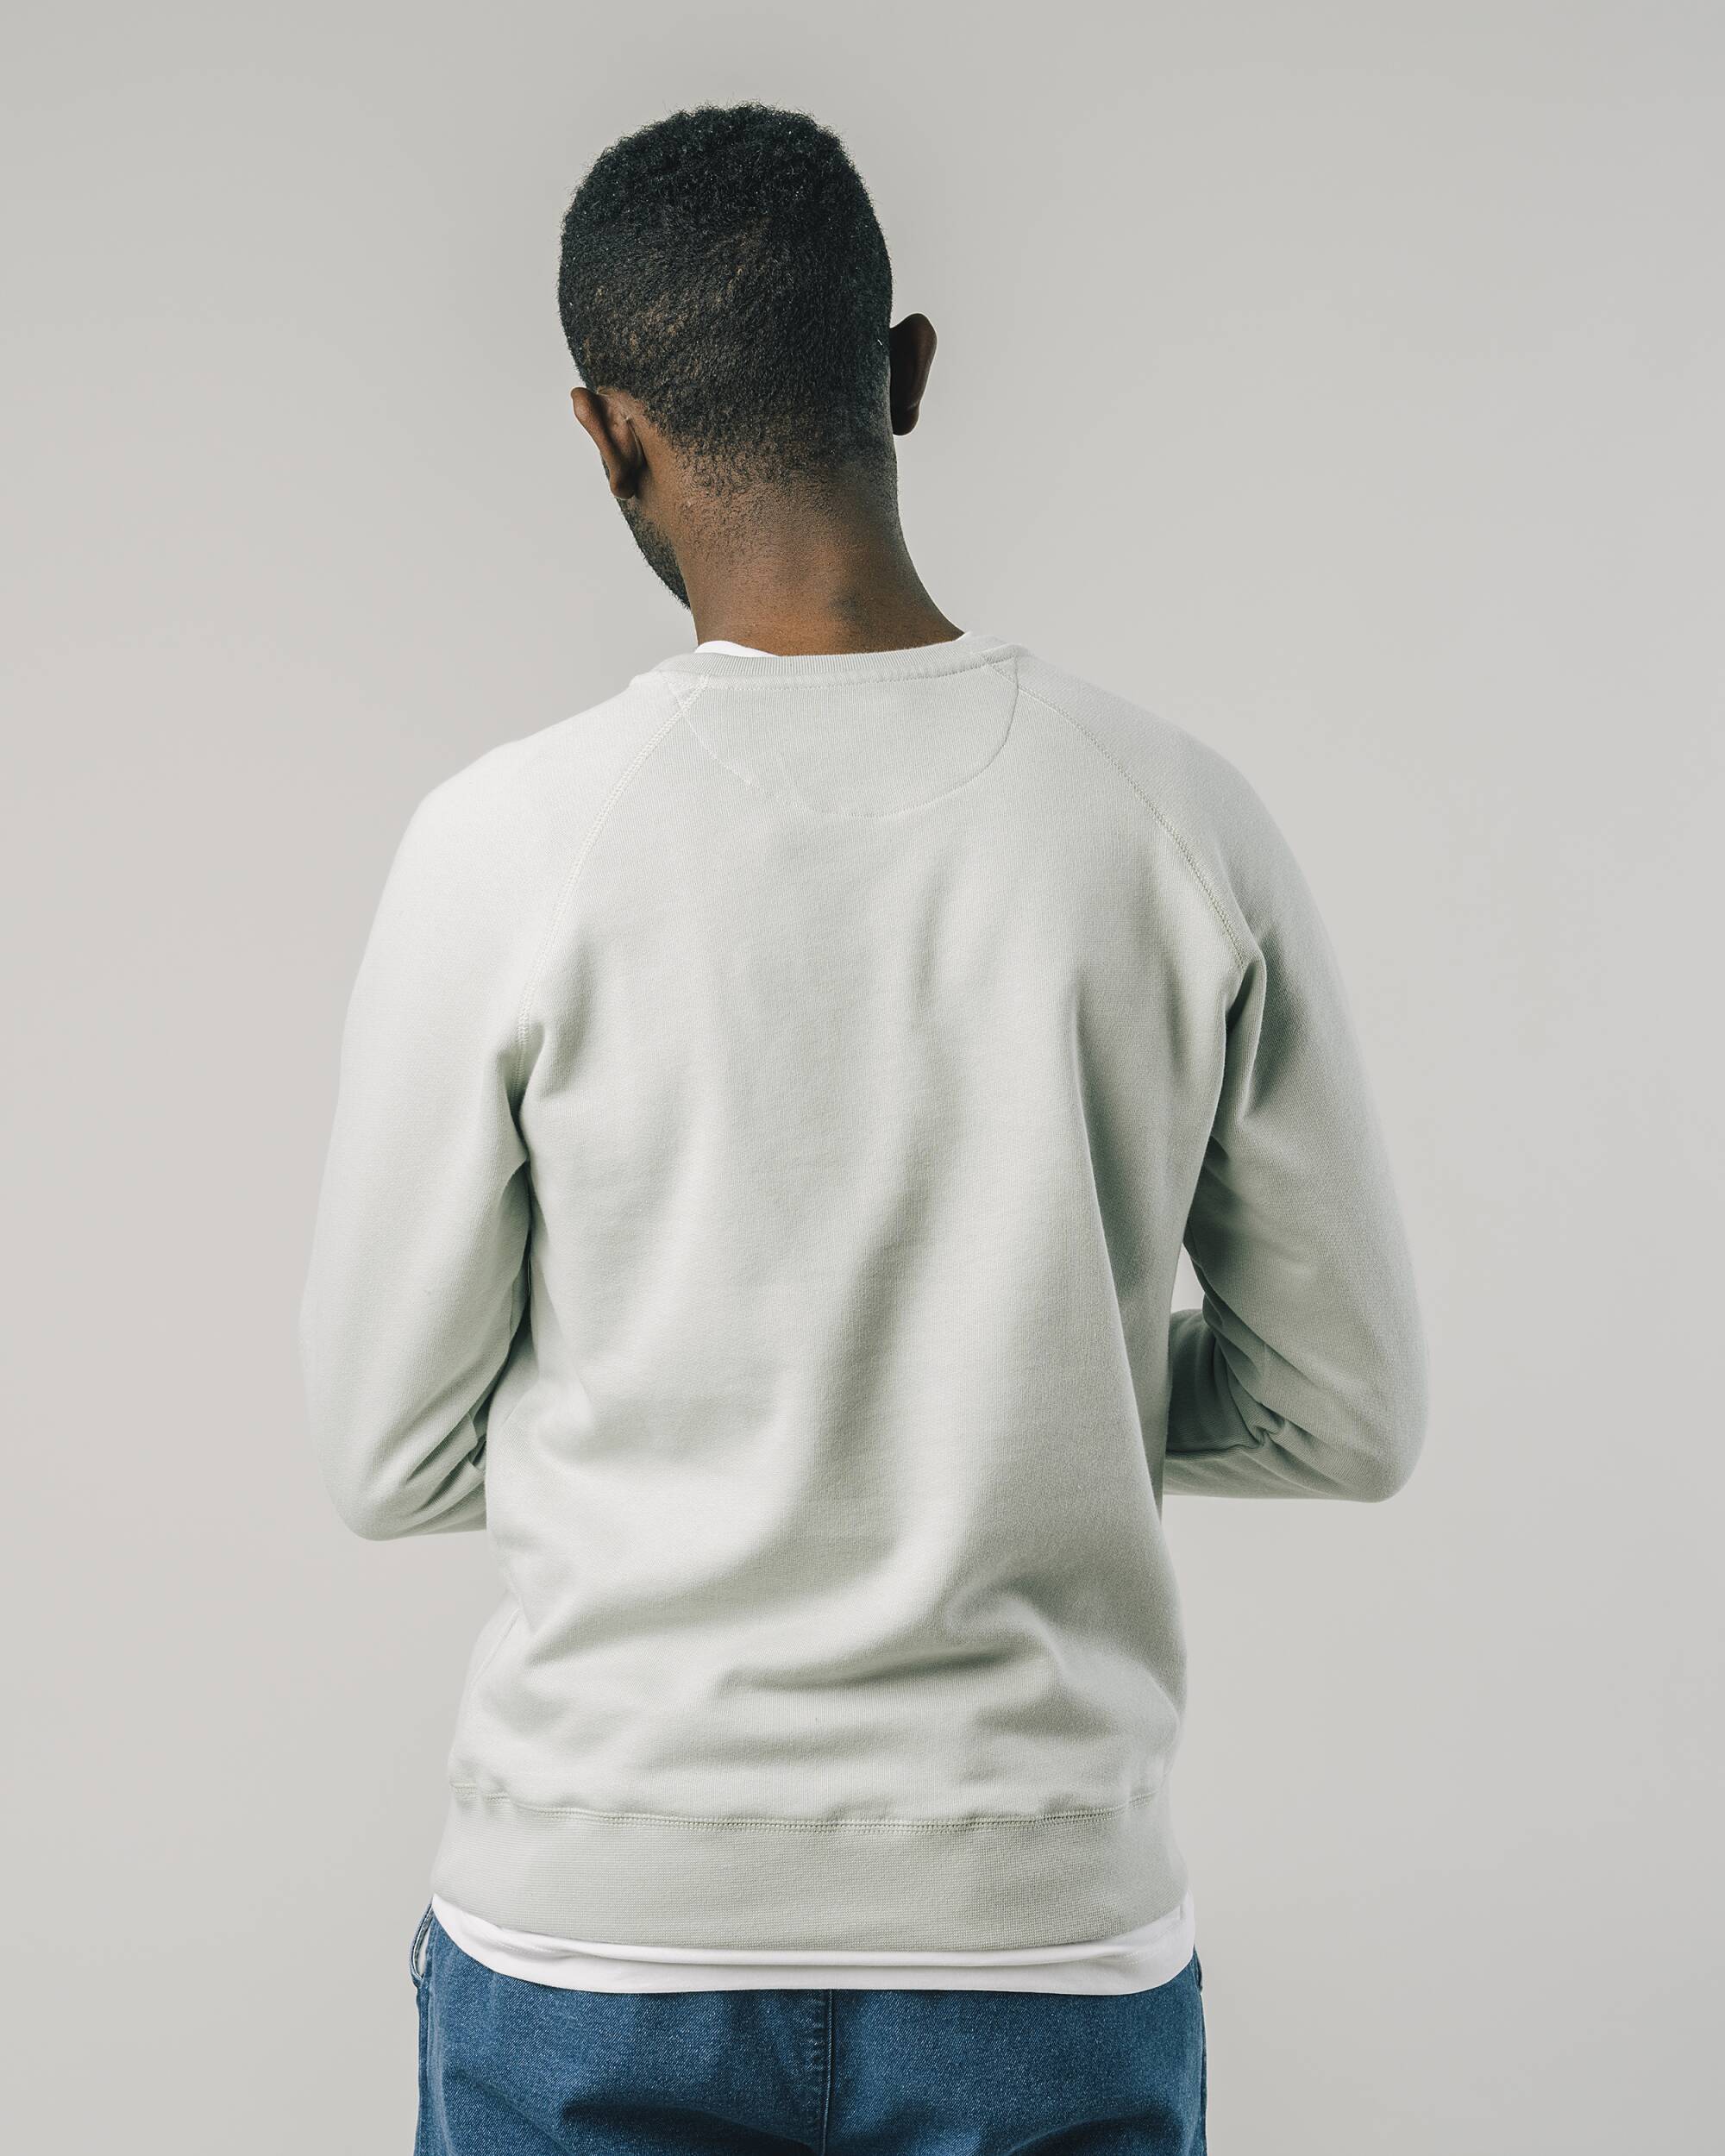 Sweatshirt "Wagon" in gray made from 100% organic cotton from Brava Fabrics